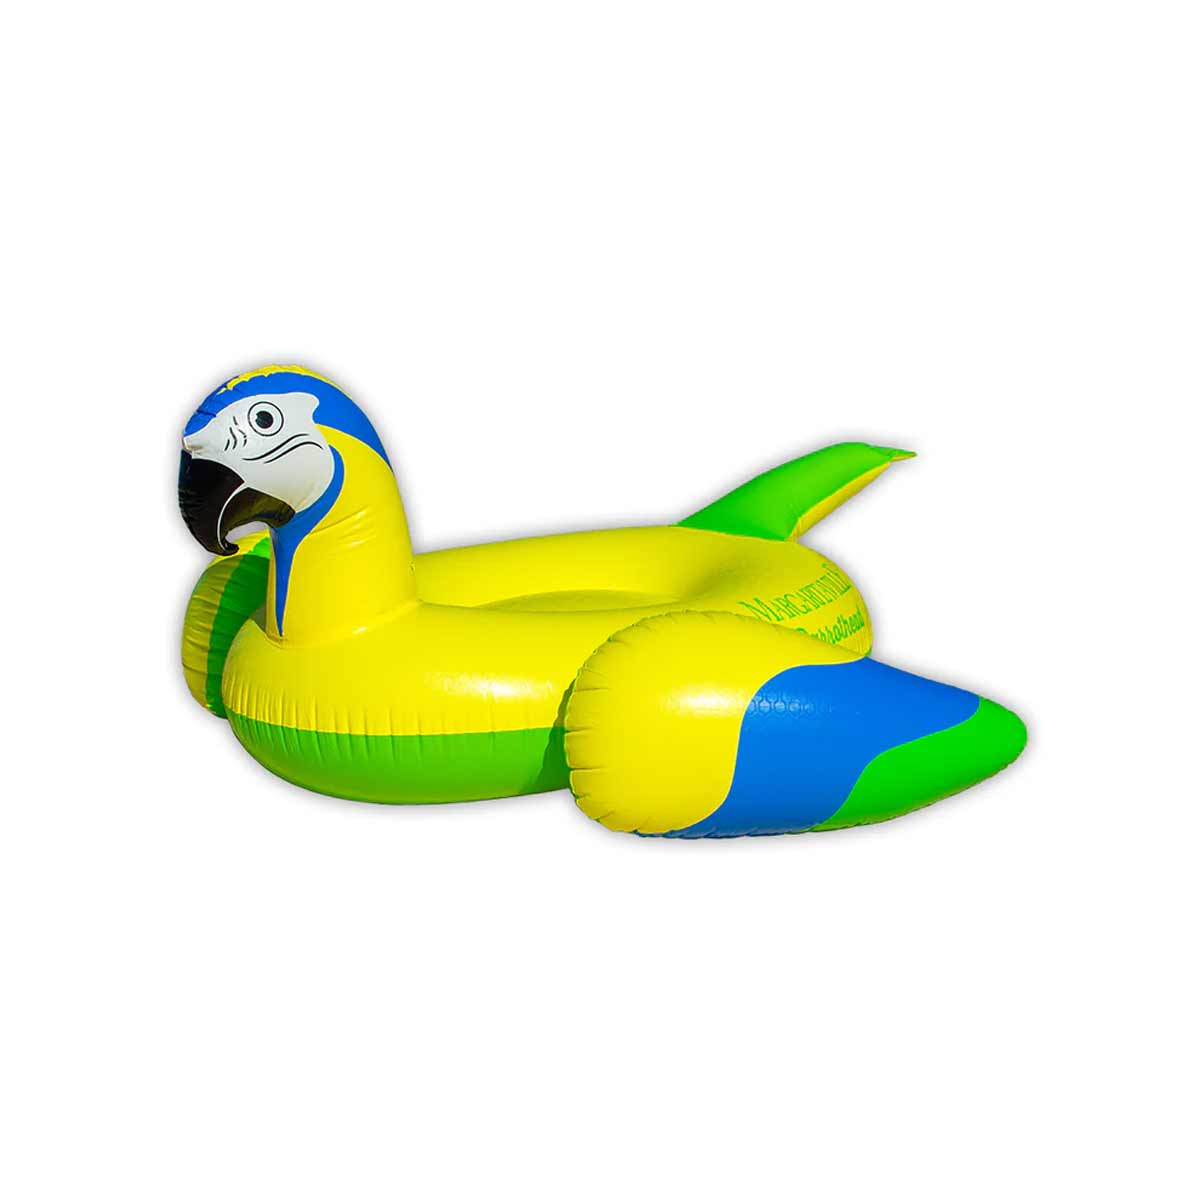 Margaritaville Parrot Head Float - Yellow